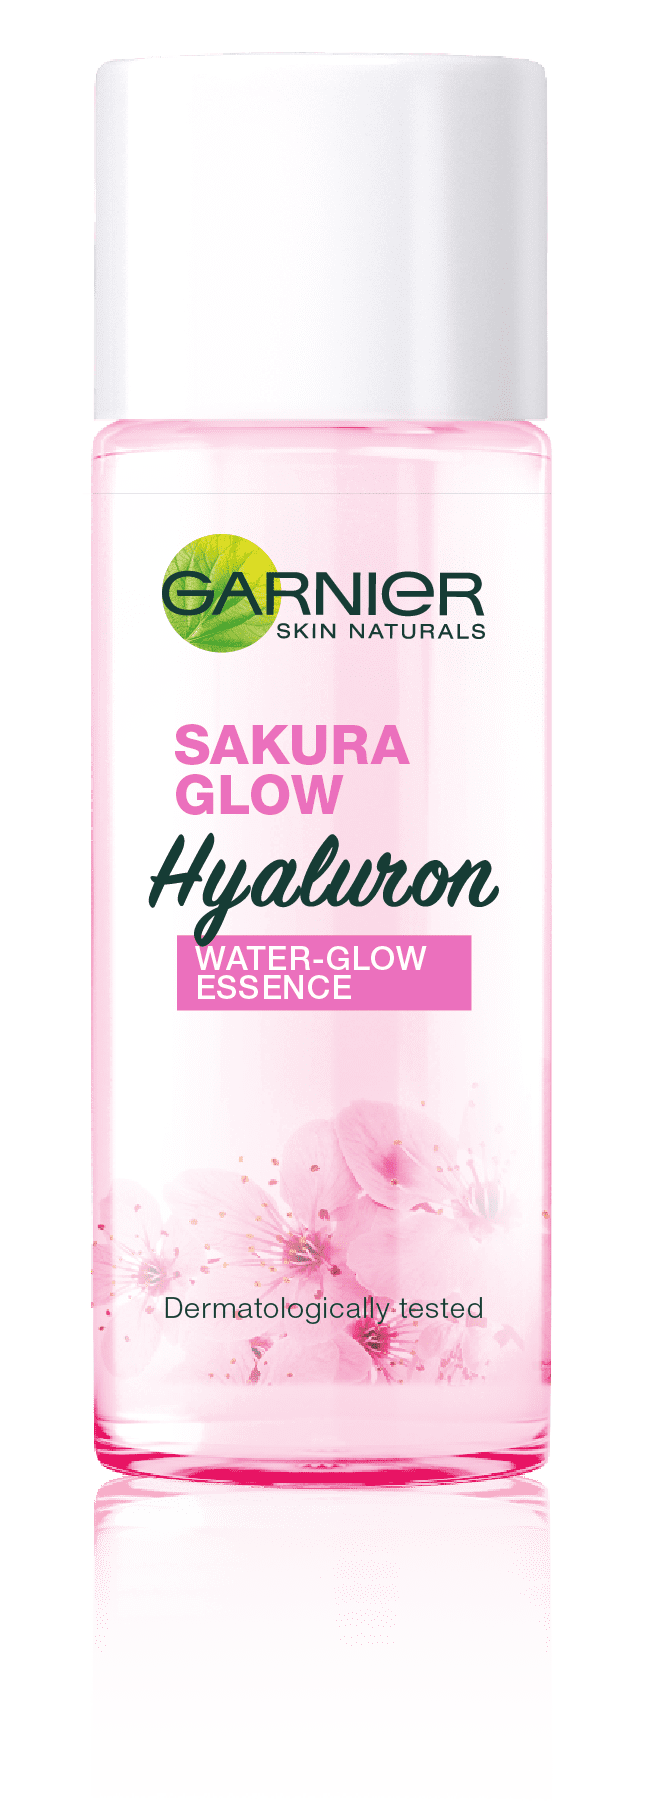 sakura white Sakura Glow water-glow essence 8994993014910_T1